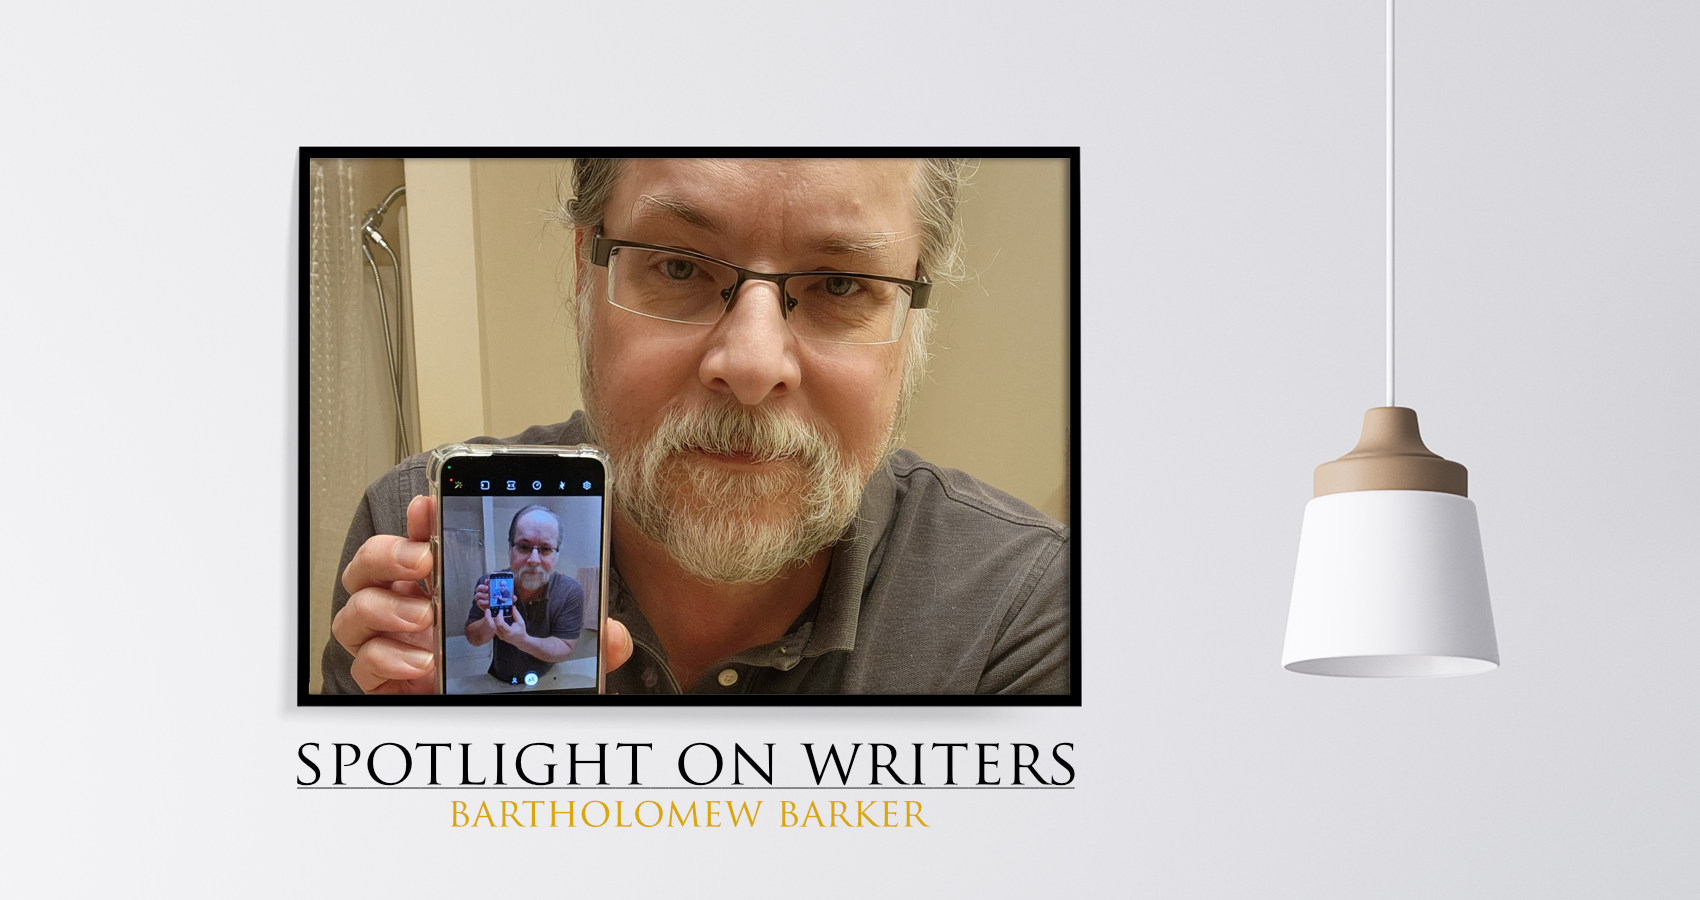 Spotlight On Writers - Bartholomew Barker, interview at Spillwords.com